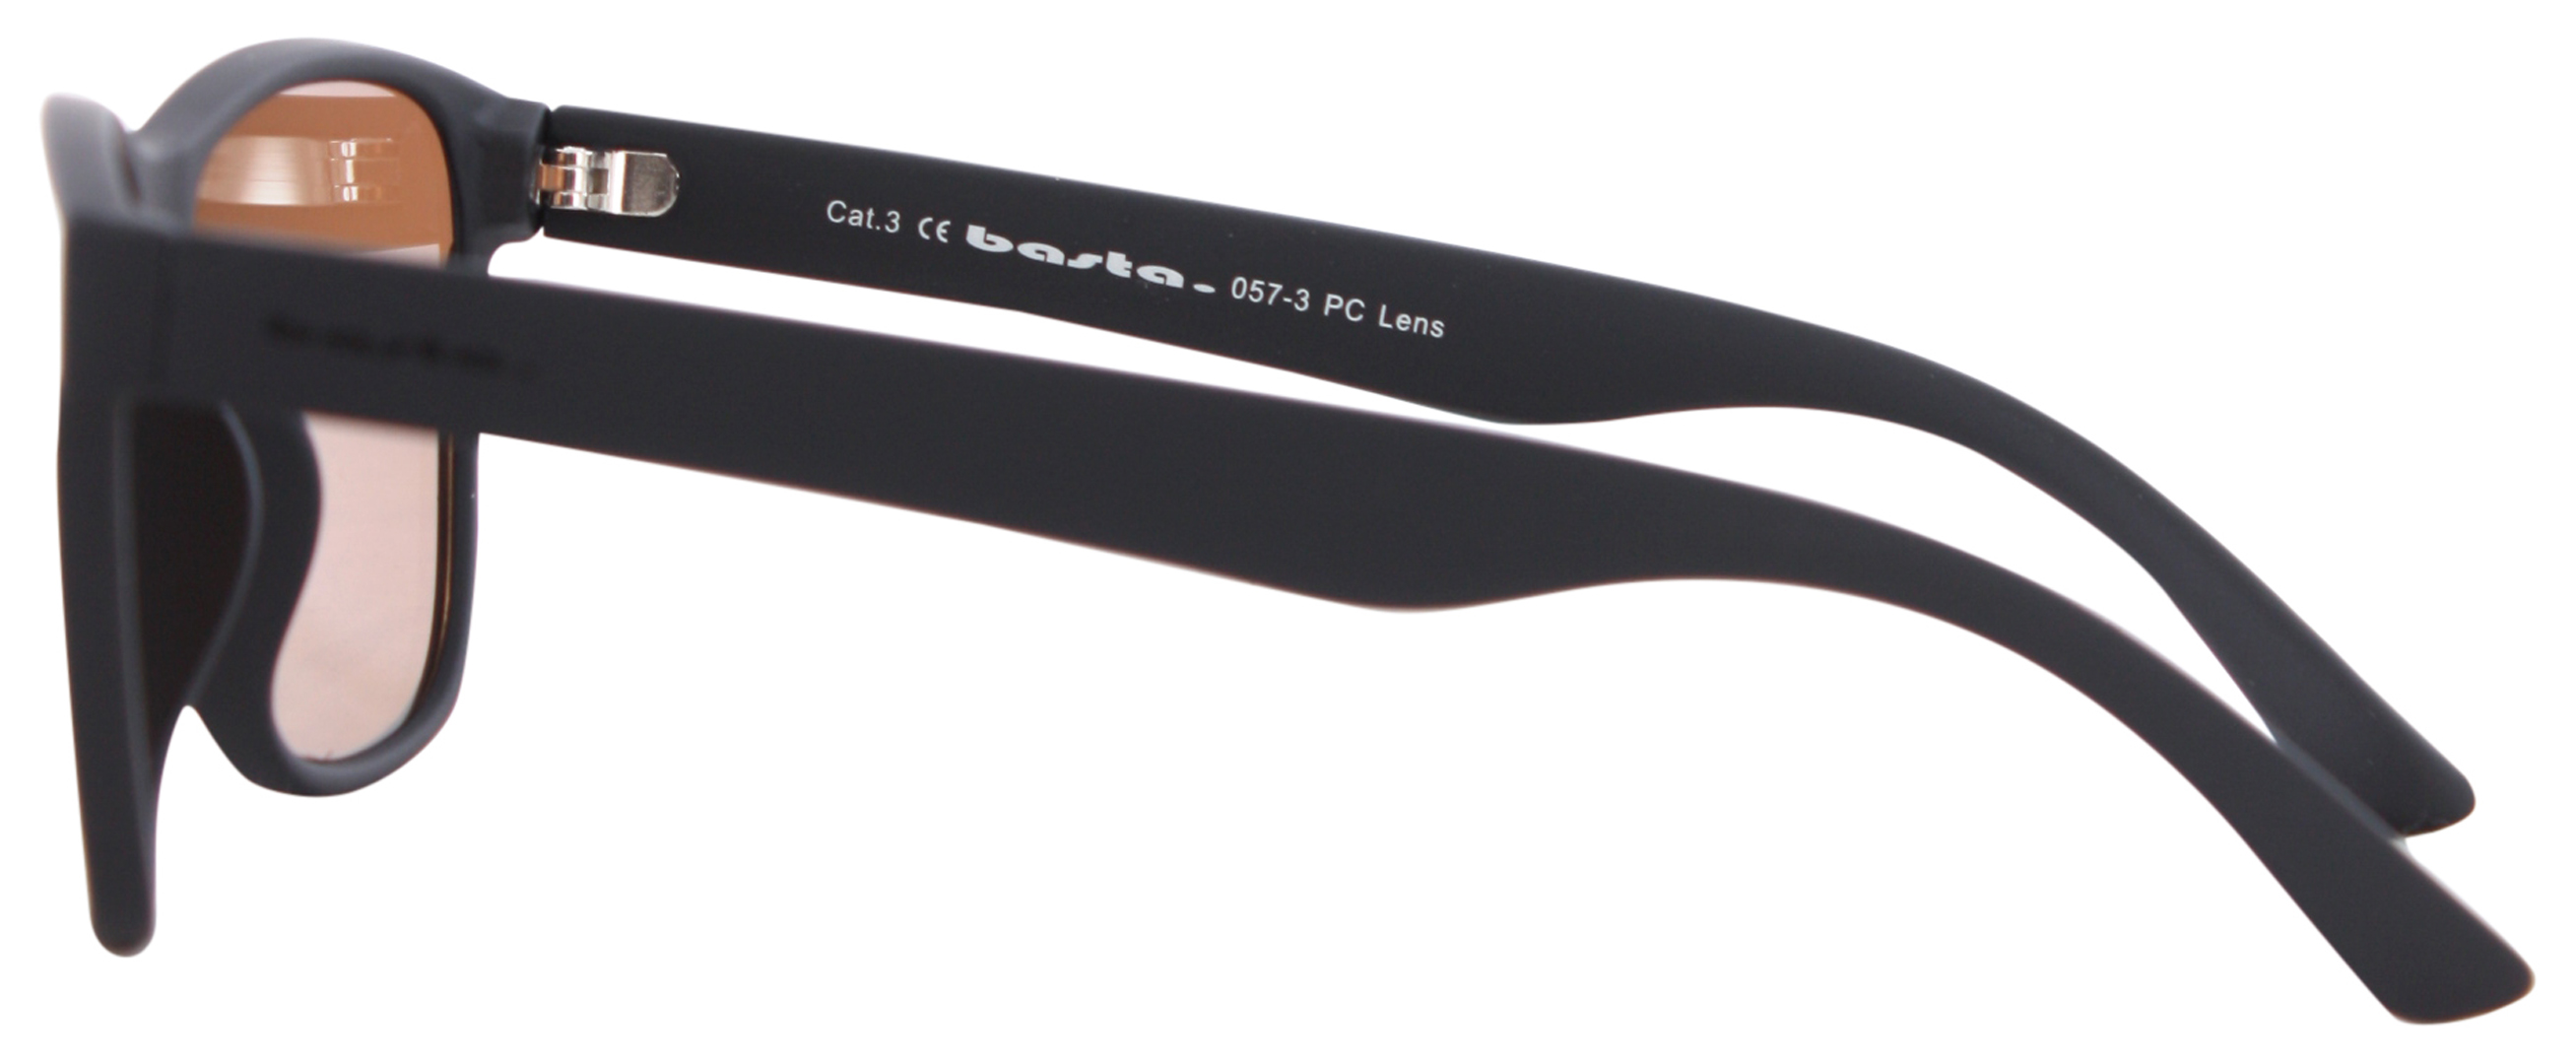 Farben Einzel-/Doppelpacks La Optica Original UV400 Unisex Retro Sonnenbrille Pilot 